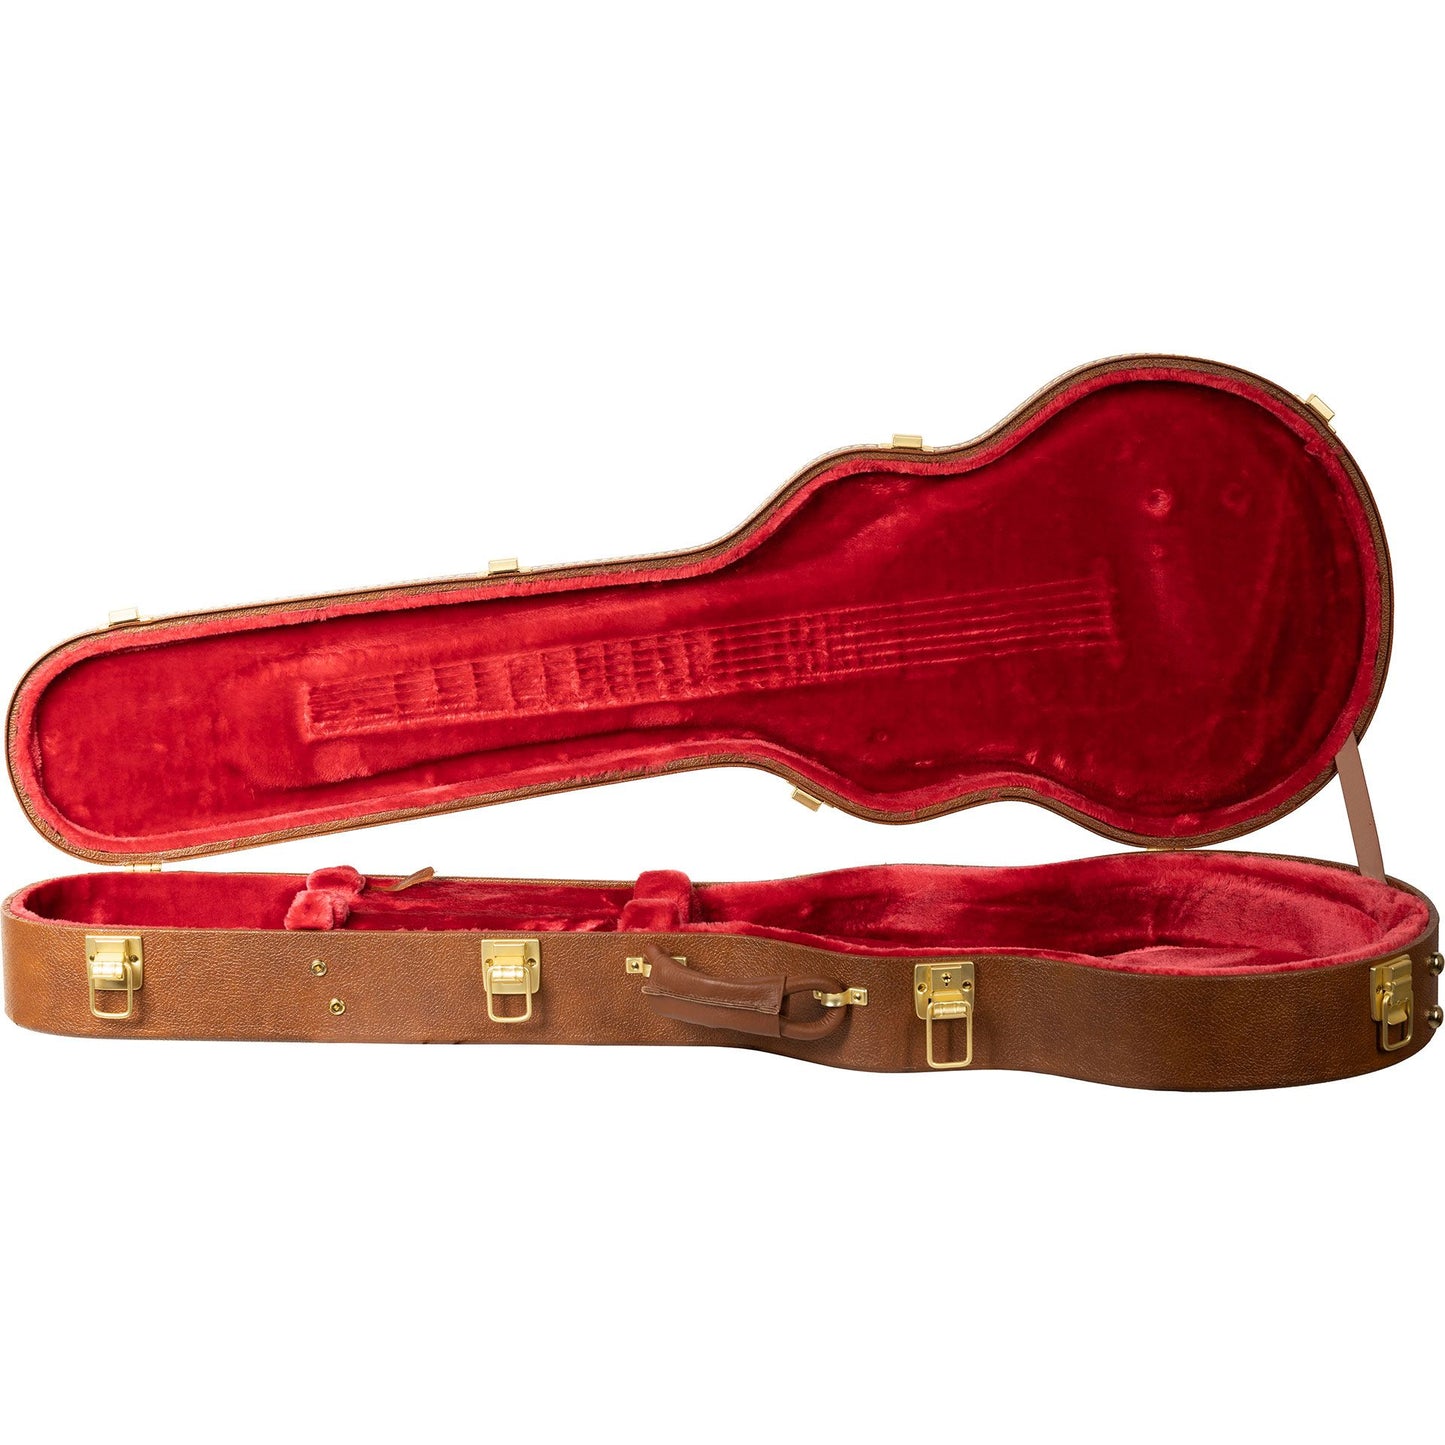 Gibson Les Paul Standard ‘60s Left Handed Electric Guitar, Bourbon Burst